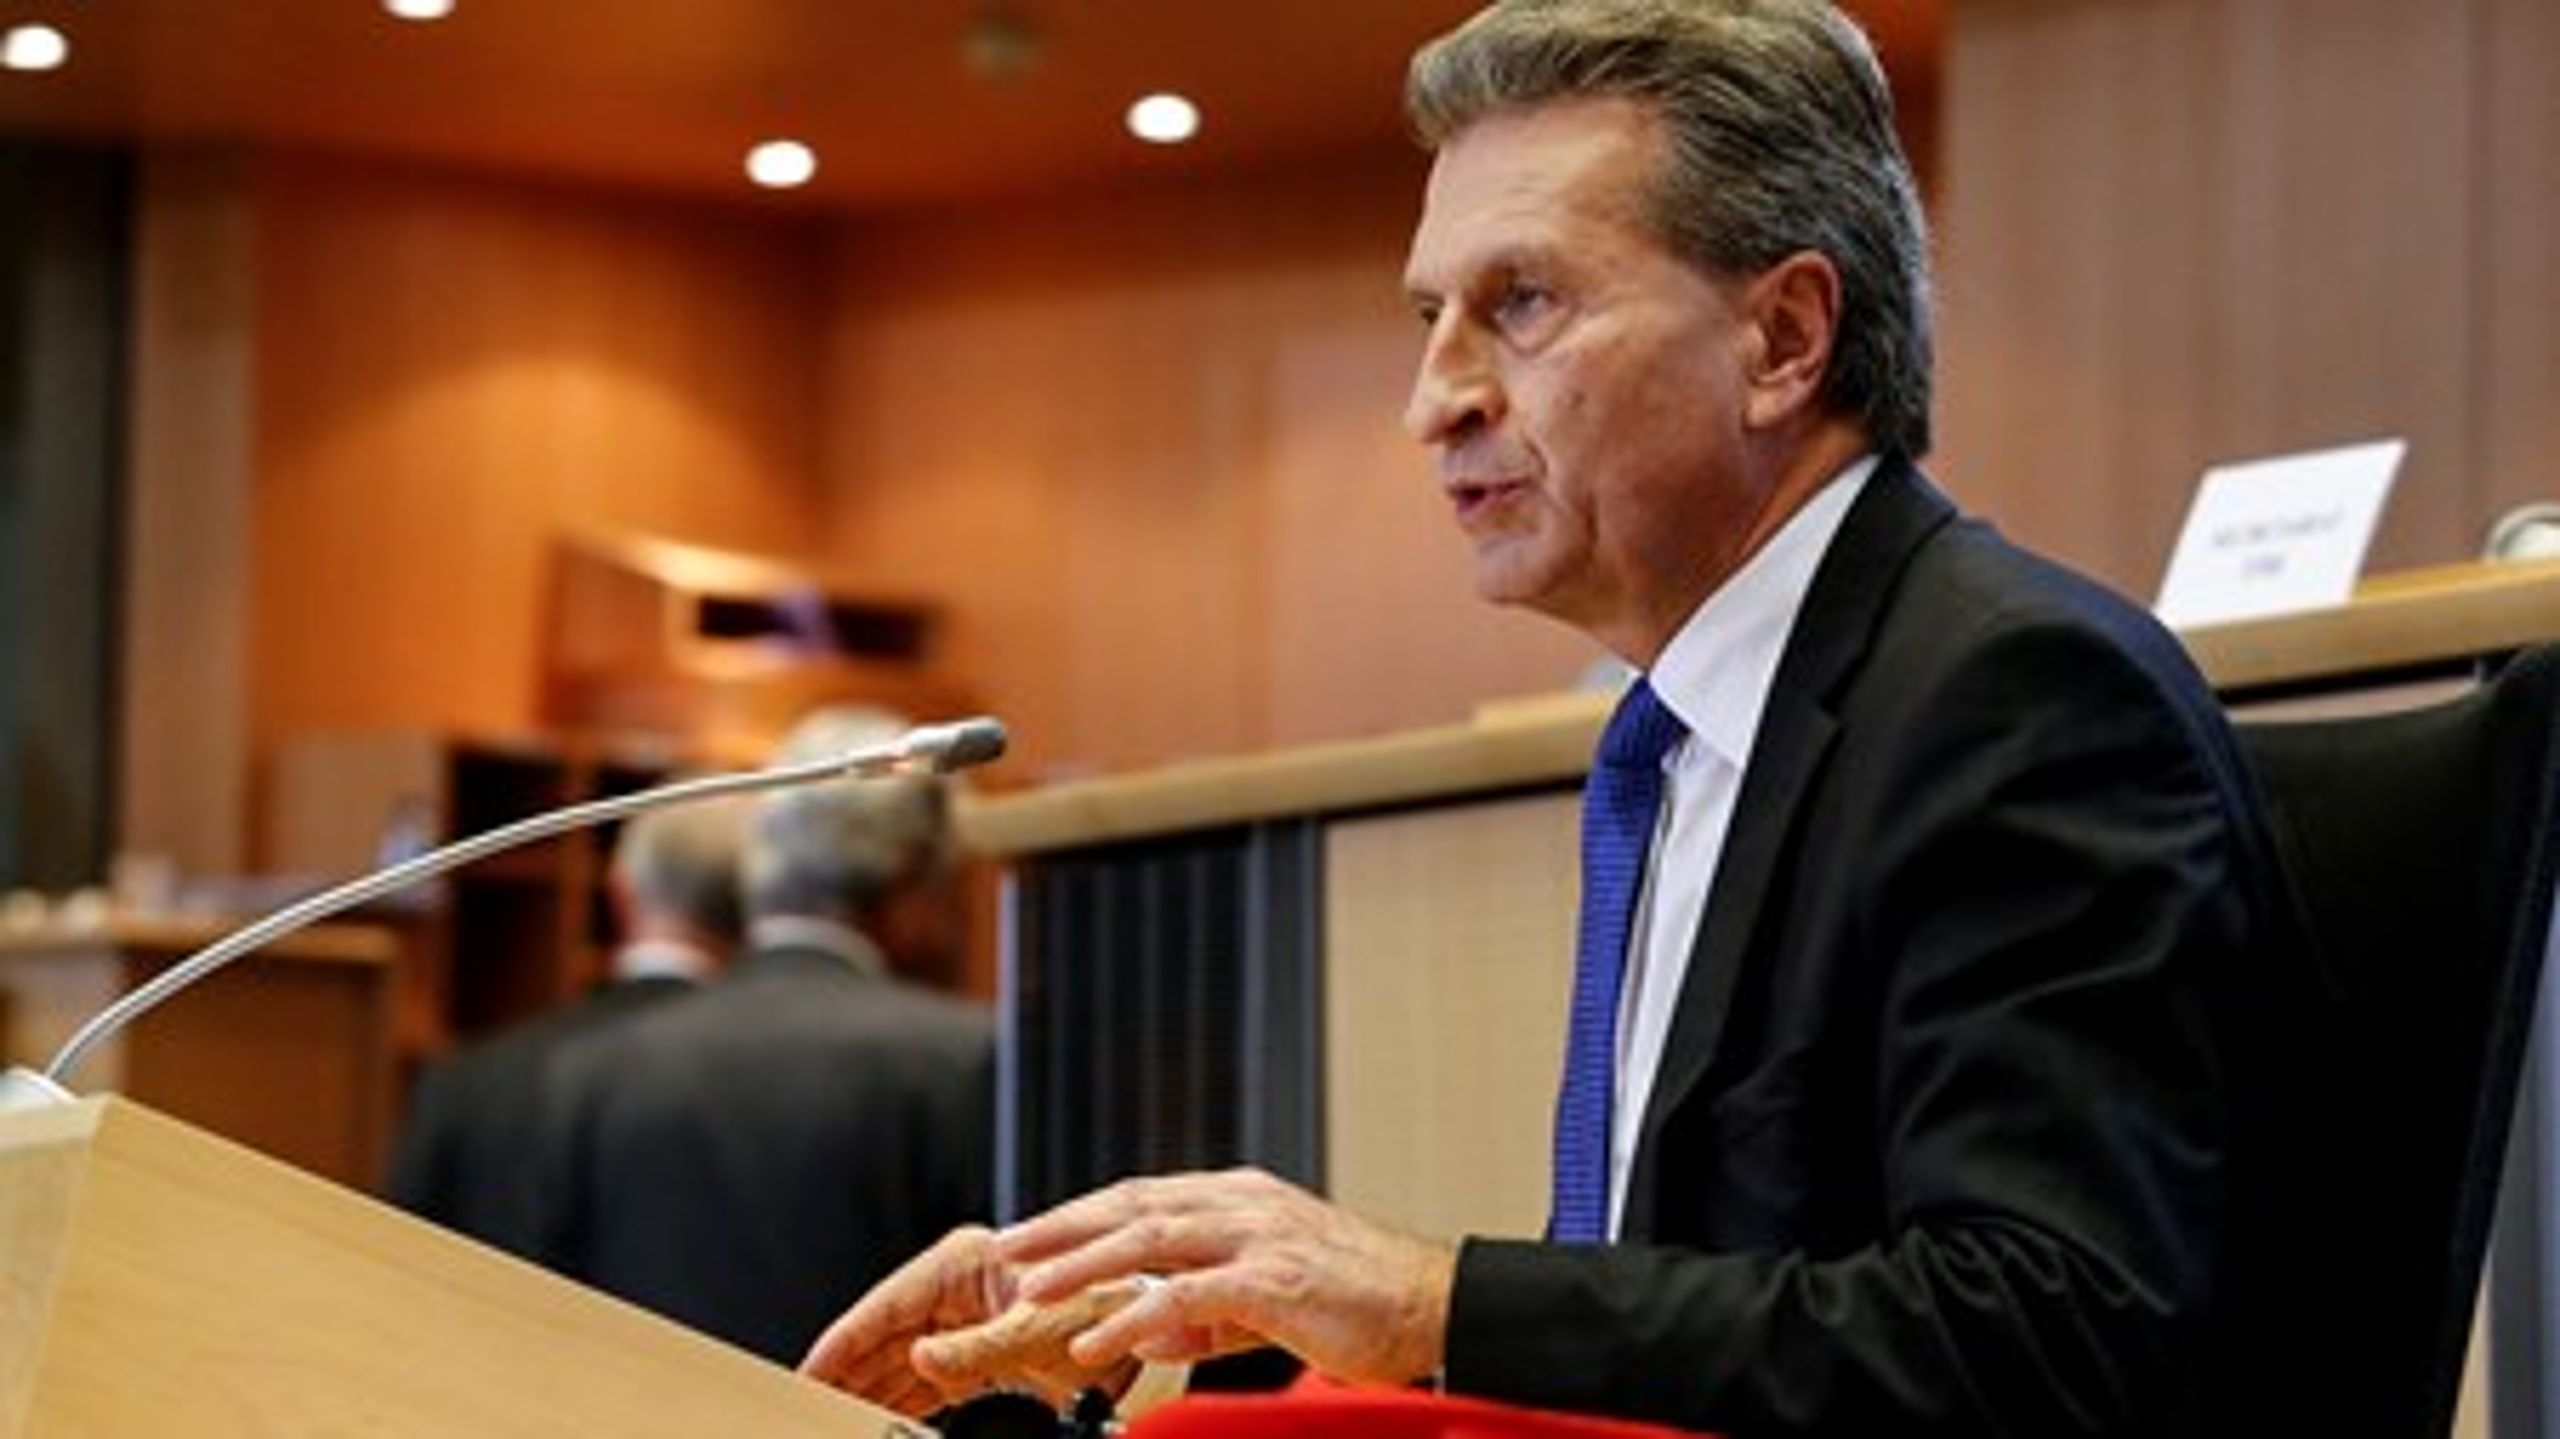 Det bliver EU's nye kommissær for digital økonomi og samfund, tyskeren&nbsp;Günther Oettinger, der fremover skal styre EU's media-program.